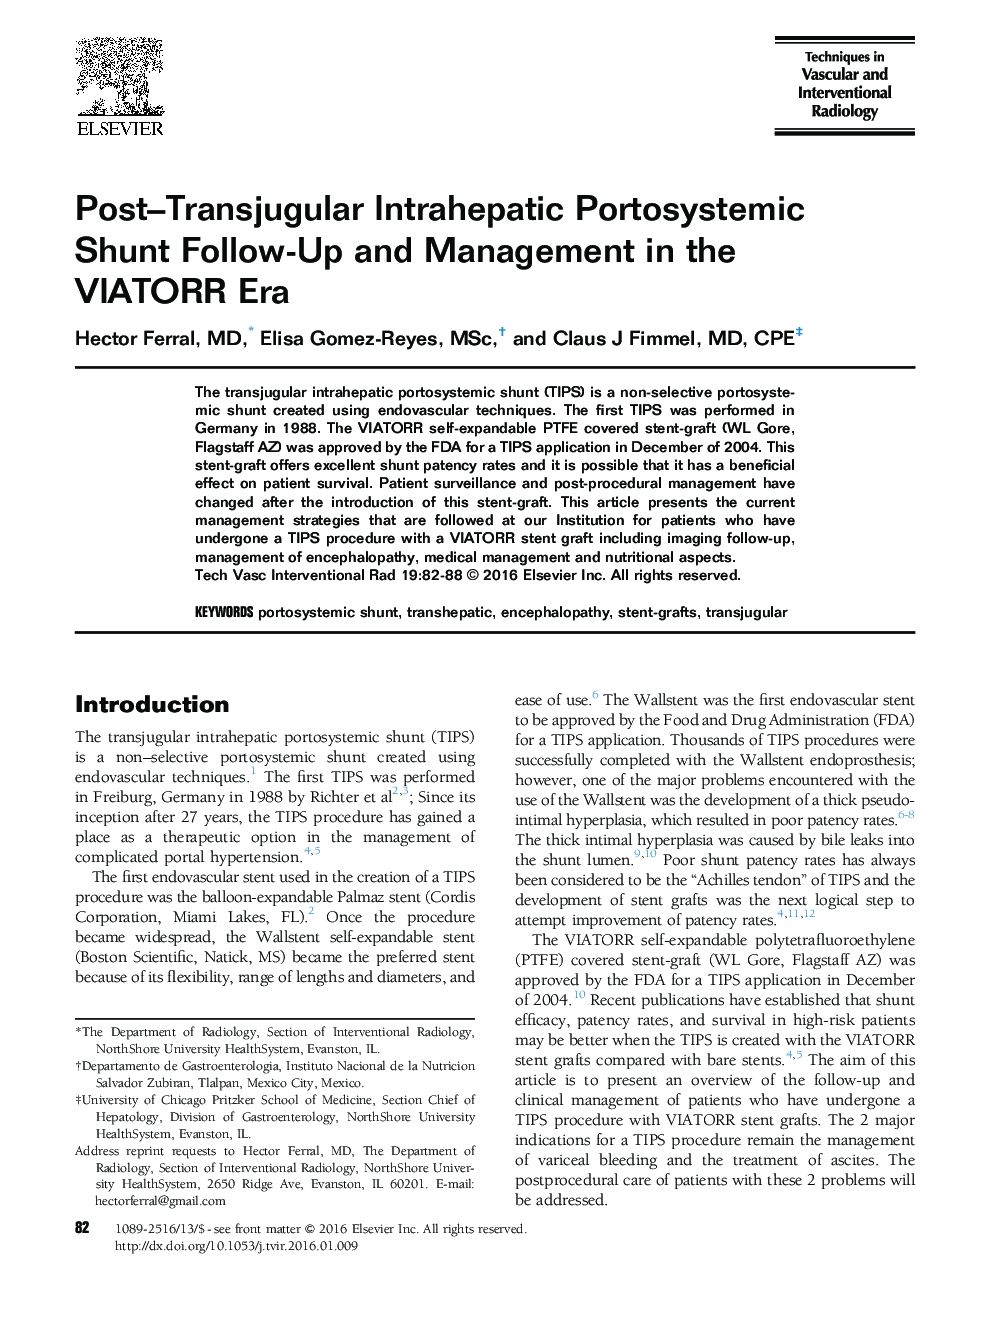 Post–Transjugular Intrahepatic Portosystemic Shunt Follow-Up and Management in the VIATORR Era